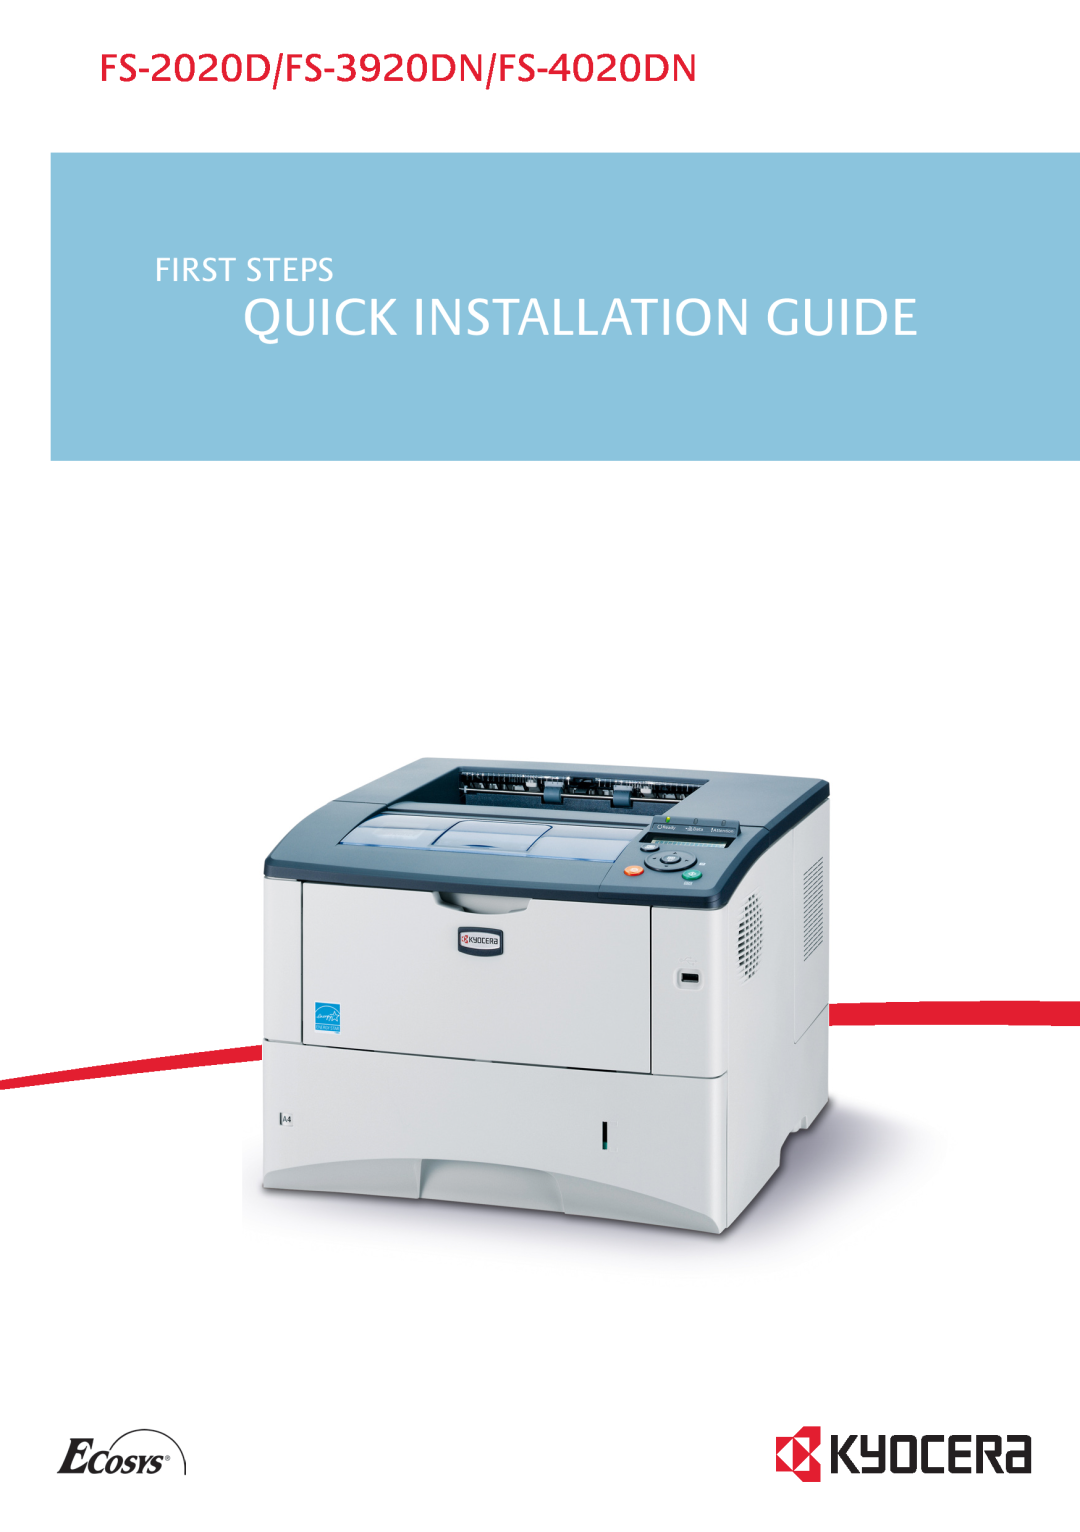 Kyocera Fs-2020d, Fs-4020dn manual Quick Installation Guide, FS-2020D/FS-3920DN/FS-4020DN, First Steps 